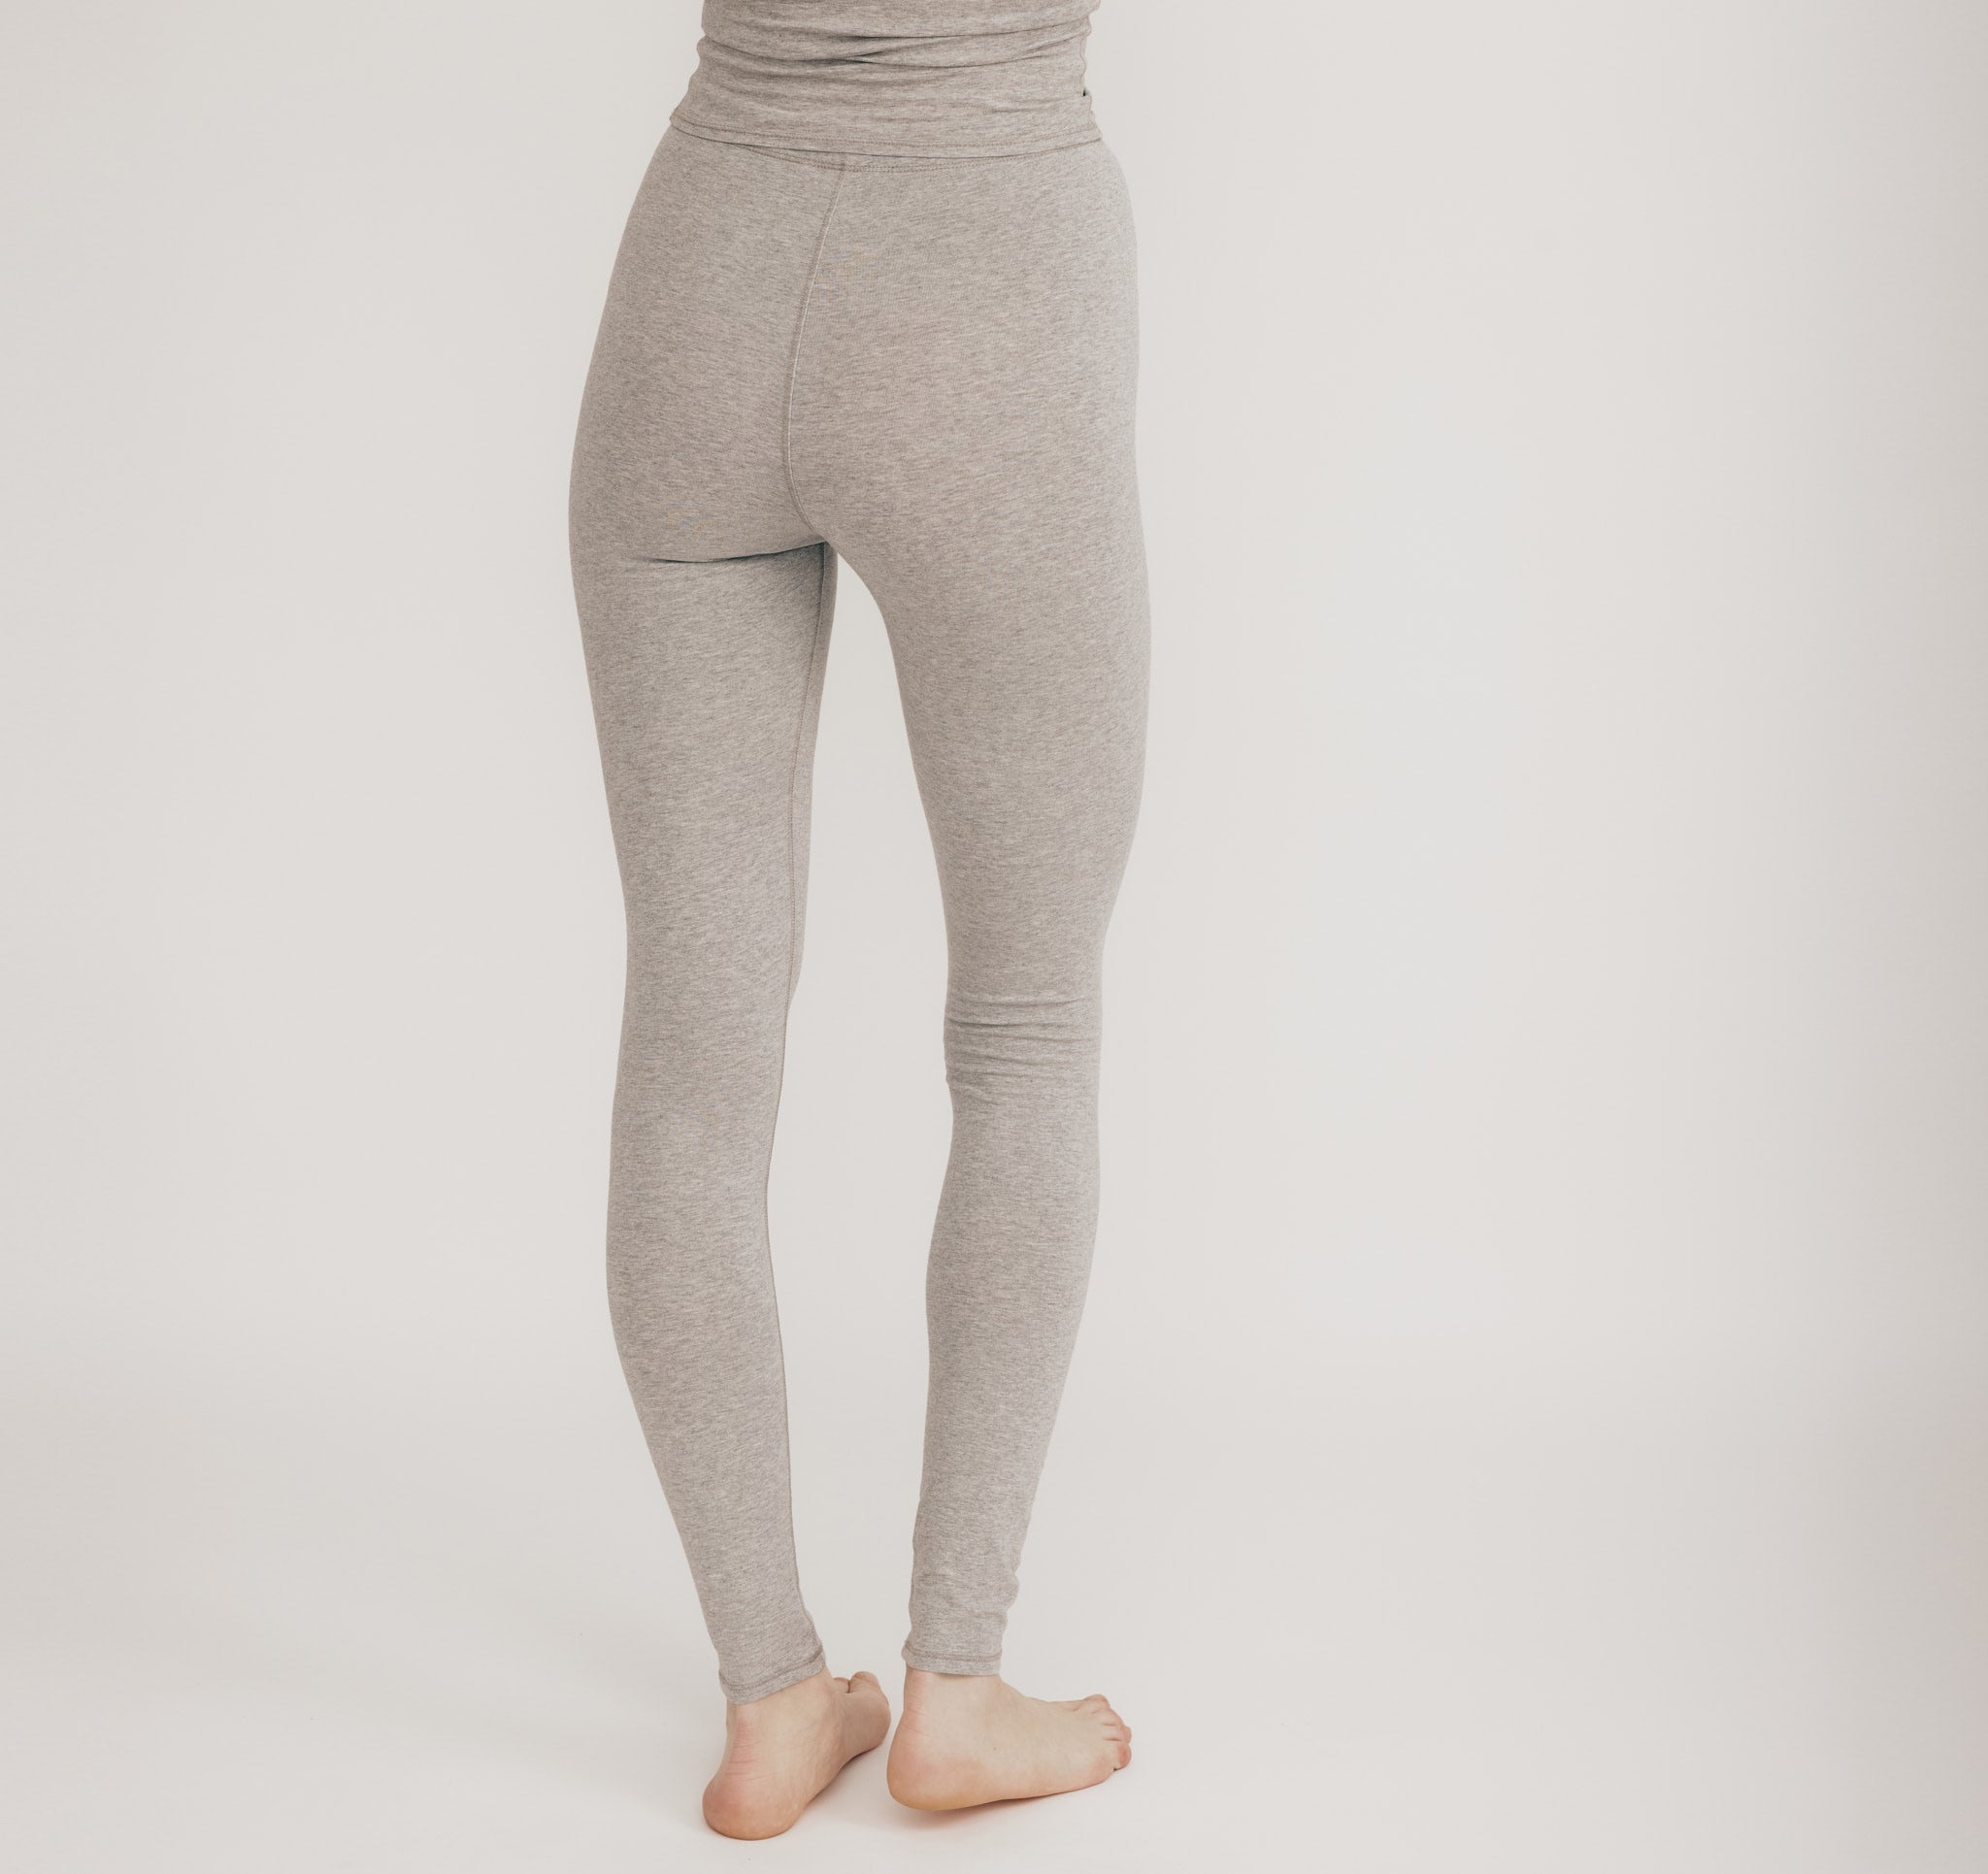 Buy SHAPERX Women Premium High Waist Cotton Leggings, Soft Light Weight  Leggings for Women Pack of 1 (L Grey) at Amazon.in